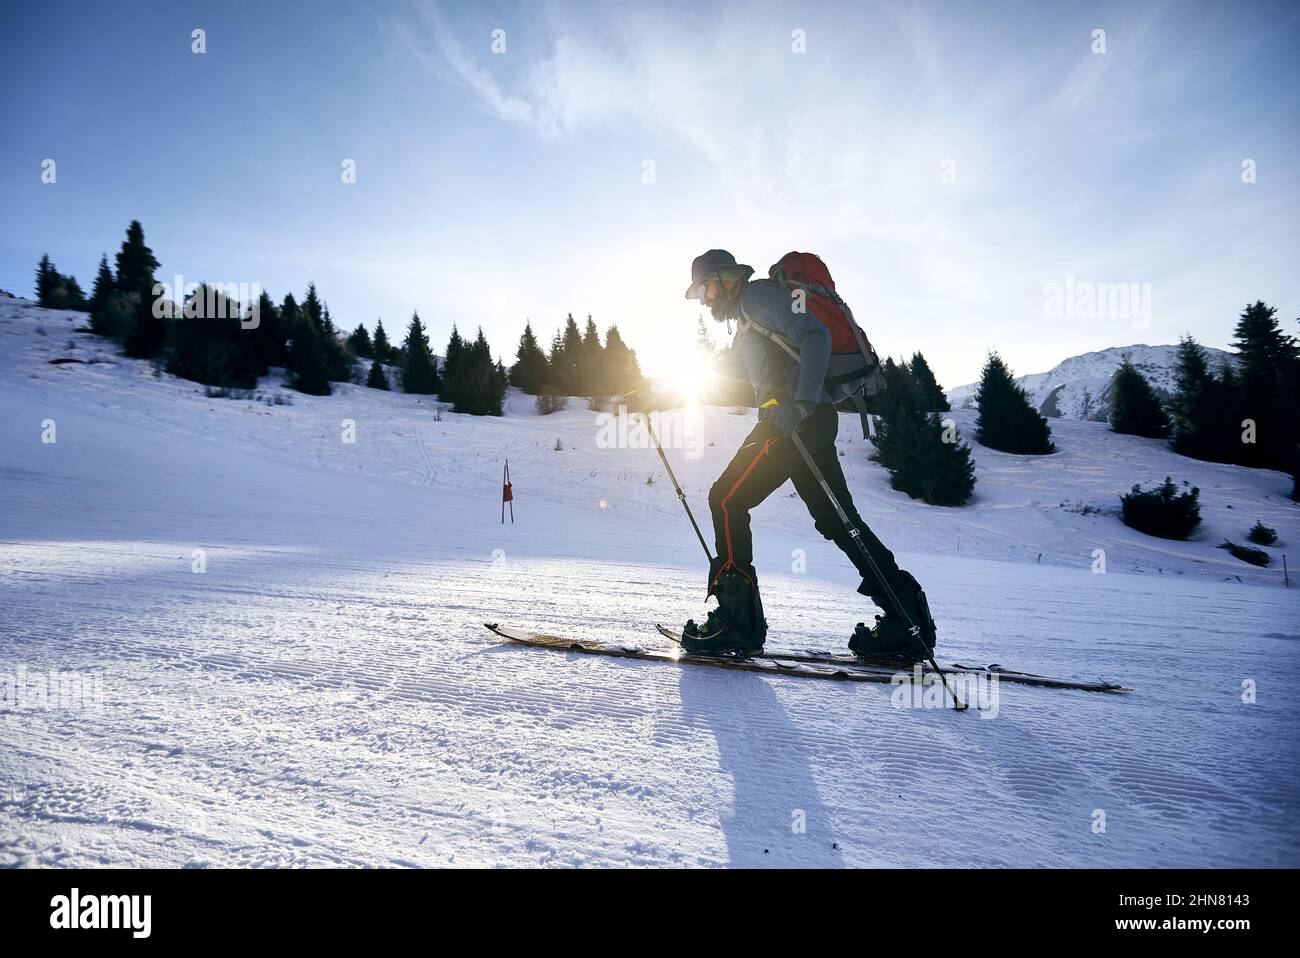 Skier man ski touring uphill with beard and backpack at high snowy mountain ski resort Shymbulak. Sport outdoor backcountry winter season. Stock Photo